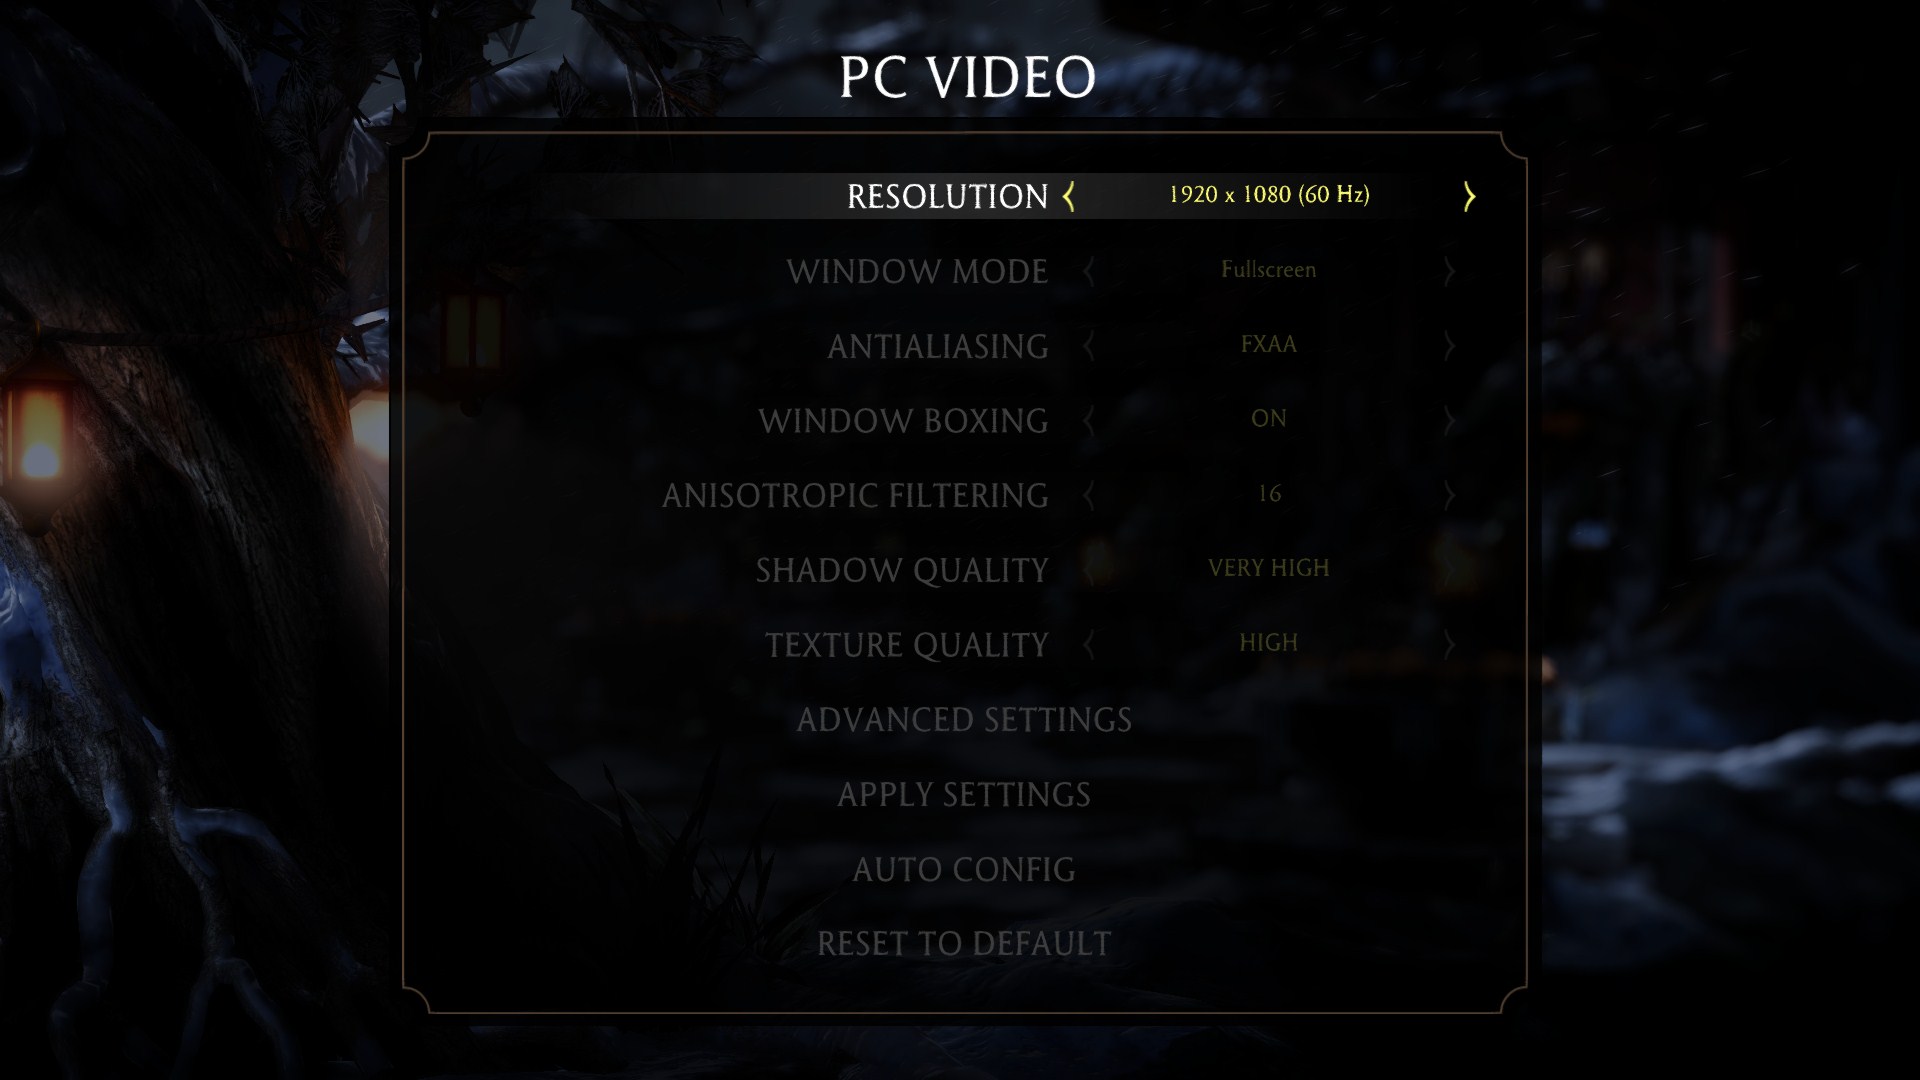 Best Mortal Kombat 1 graphics settings for Xbox Series X/S